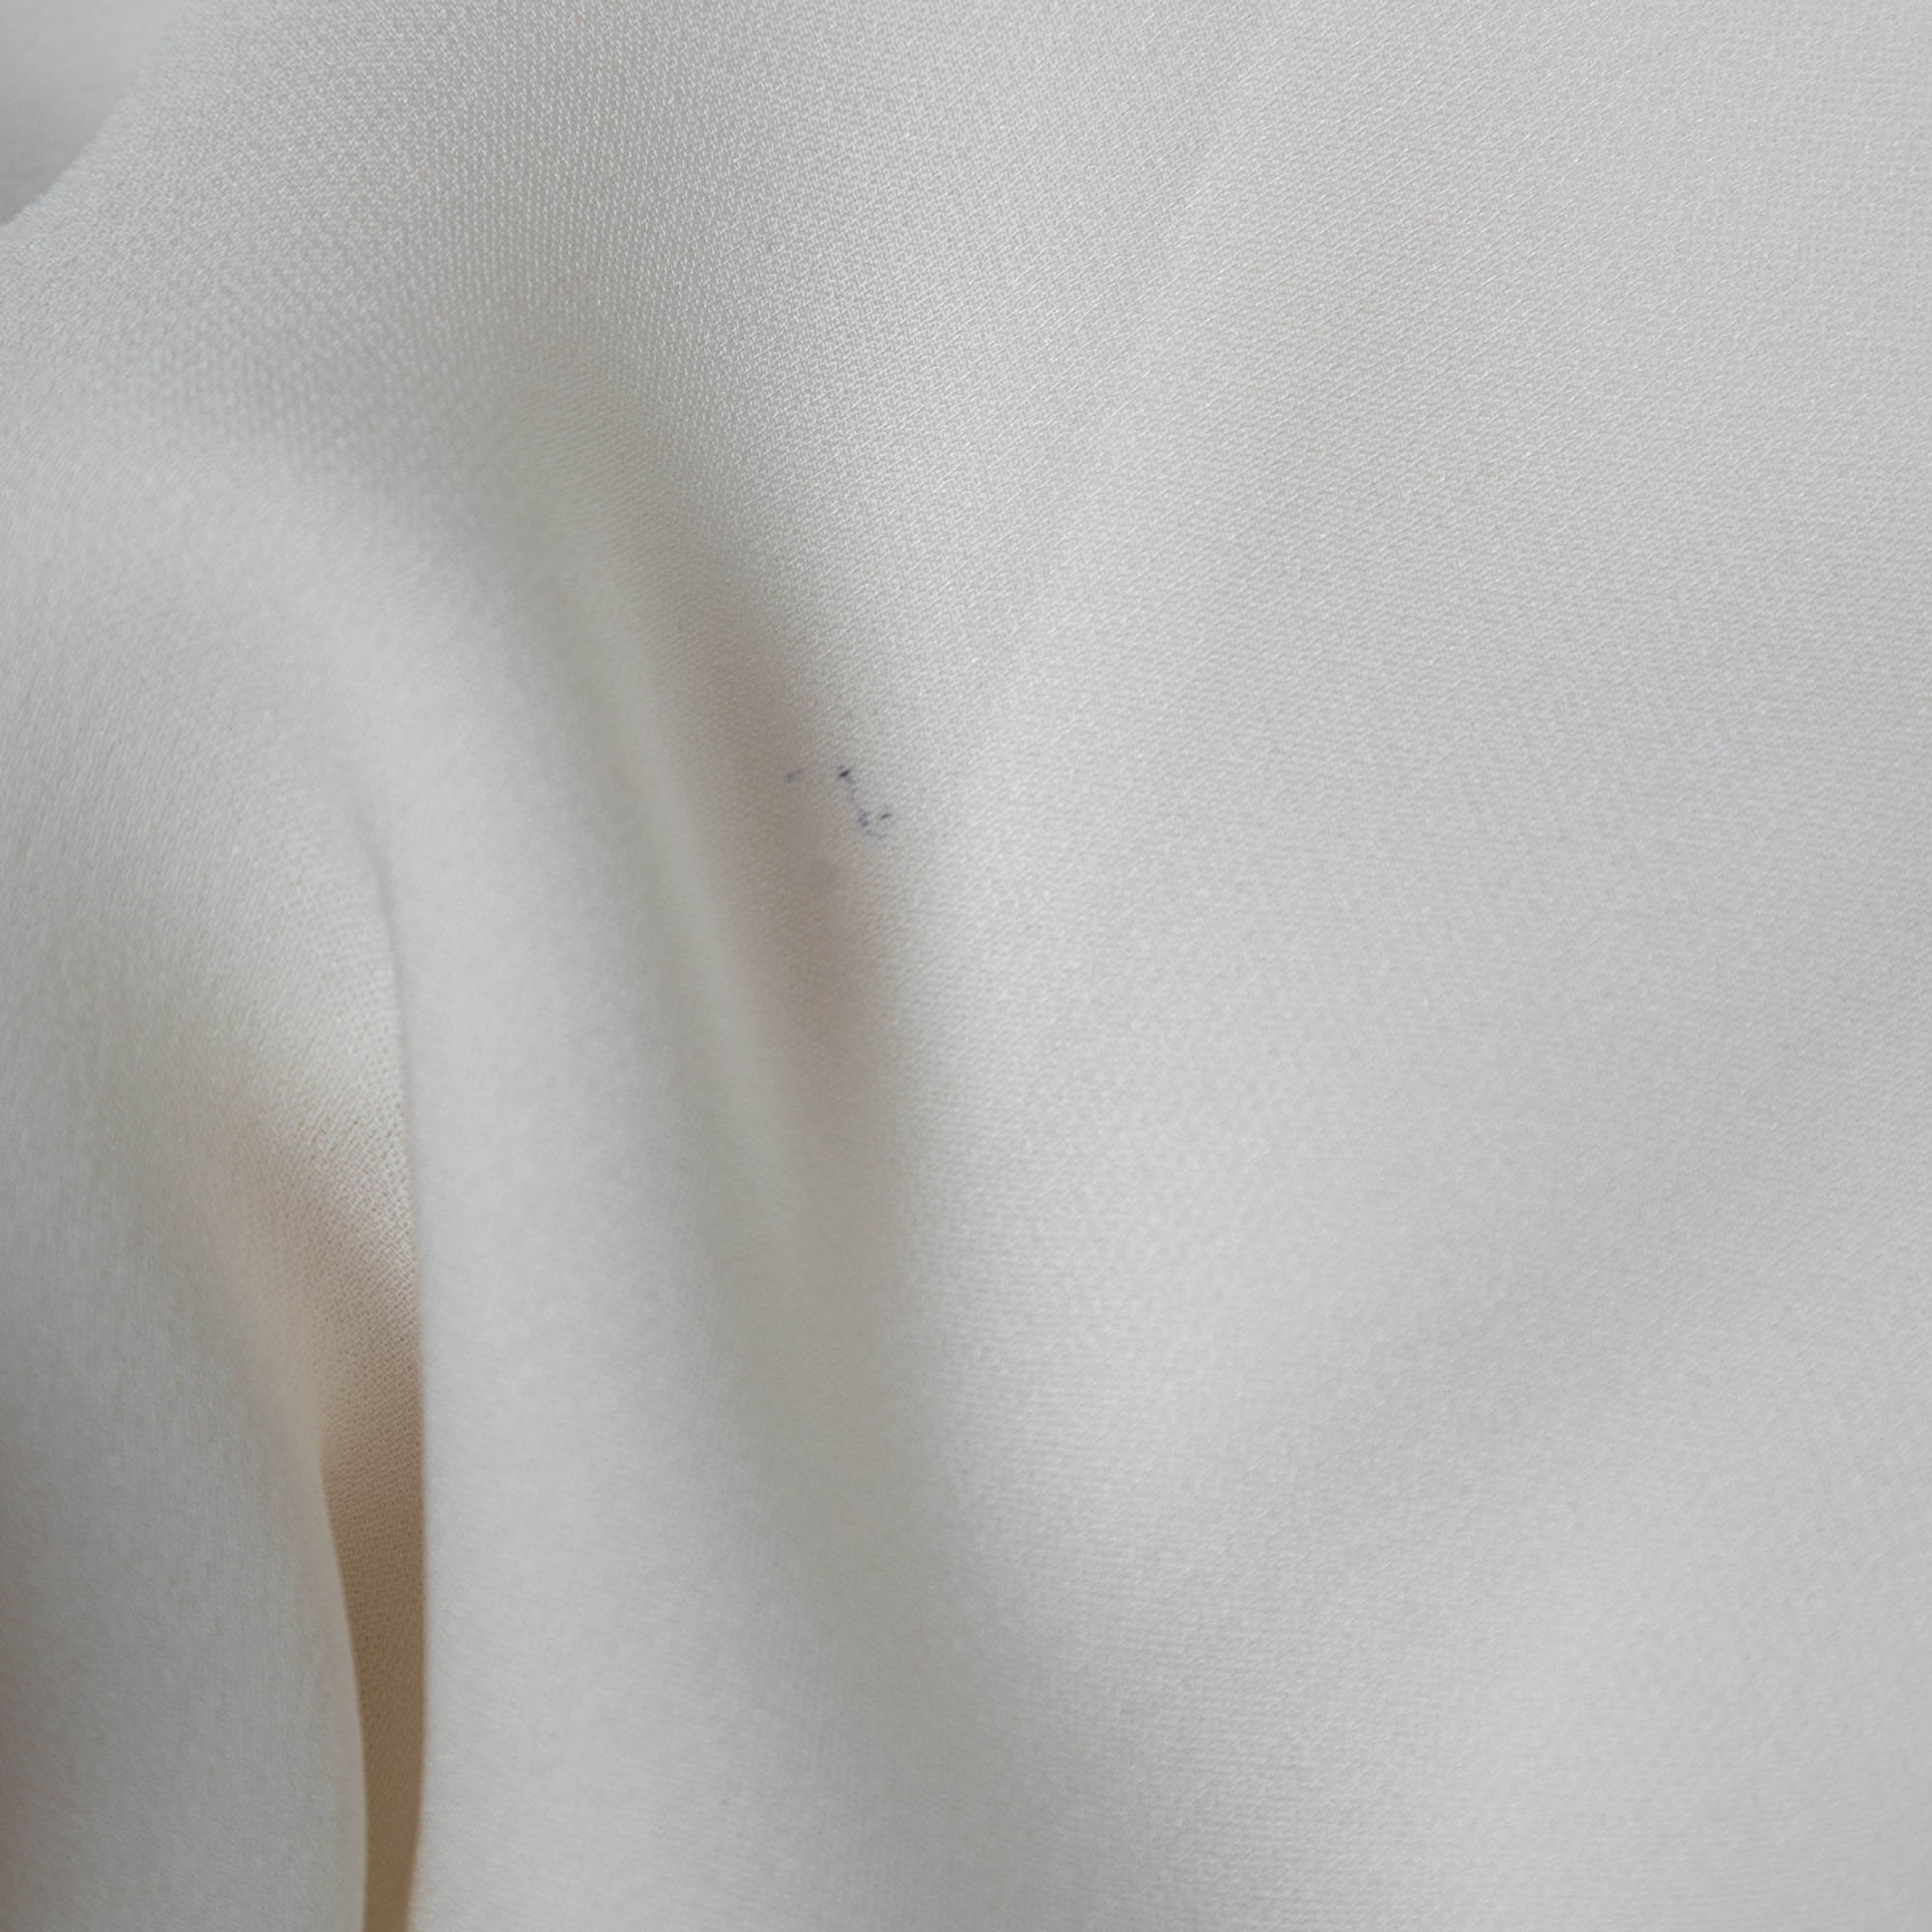 Diane Von Furstenberg Cream Silk Sleeveless Ruffled Hem Top S